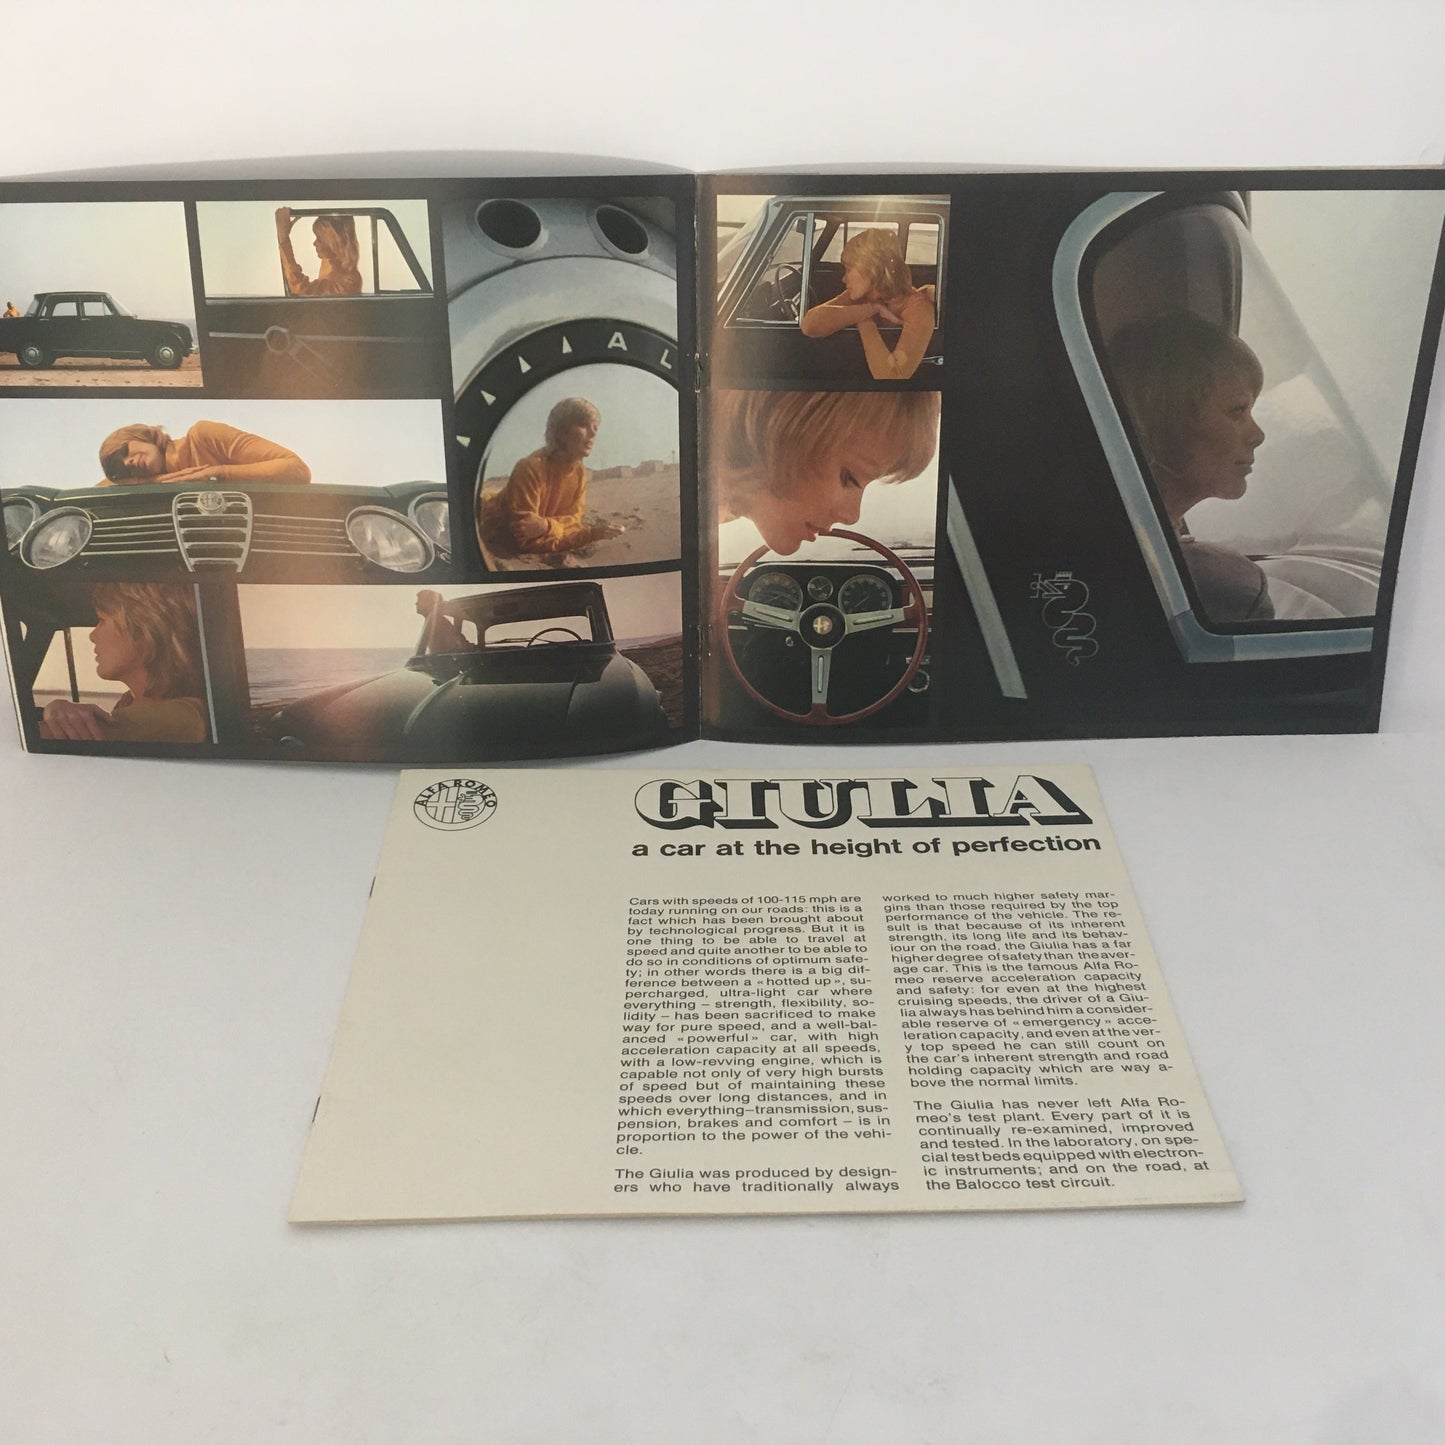 Alfa Romeo, Brochure Giulia 1600 Super Alfa Romeo, Inserto Alfa Romeo Giulia, Anni '60 '70, Lingua Inglese